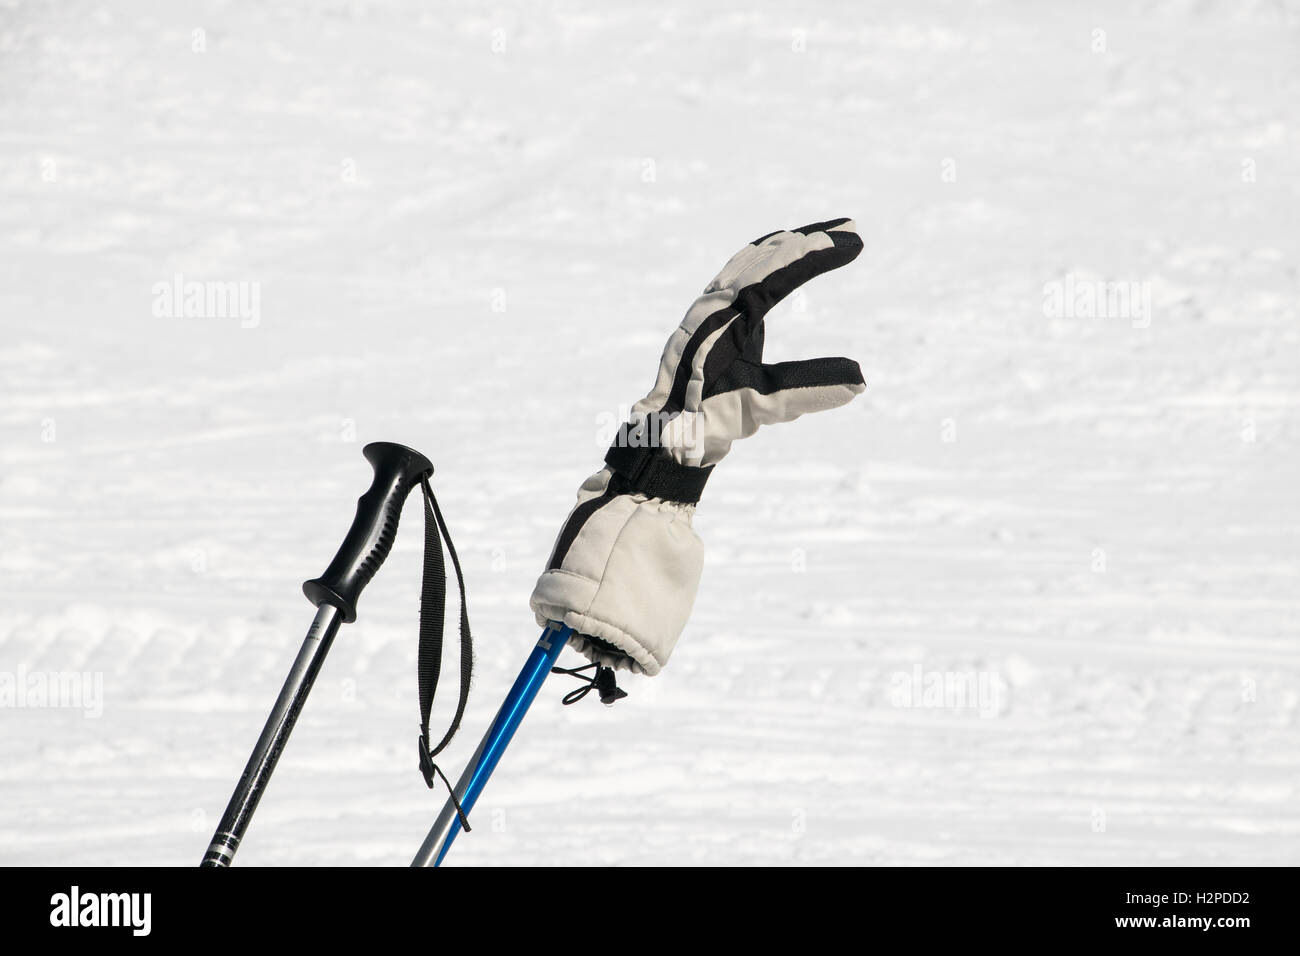 Ski-Handschuh auf Skistock im Schnee Stockfoto